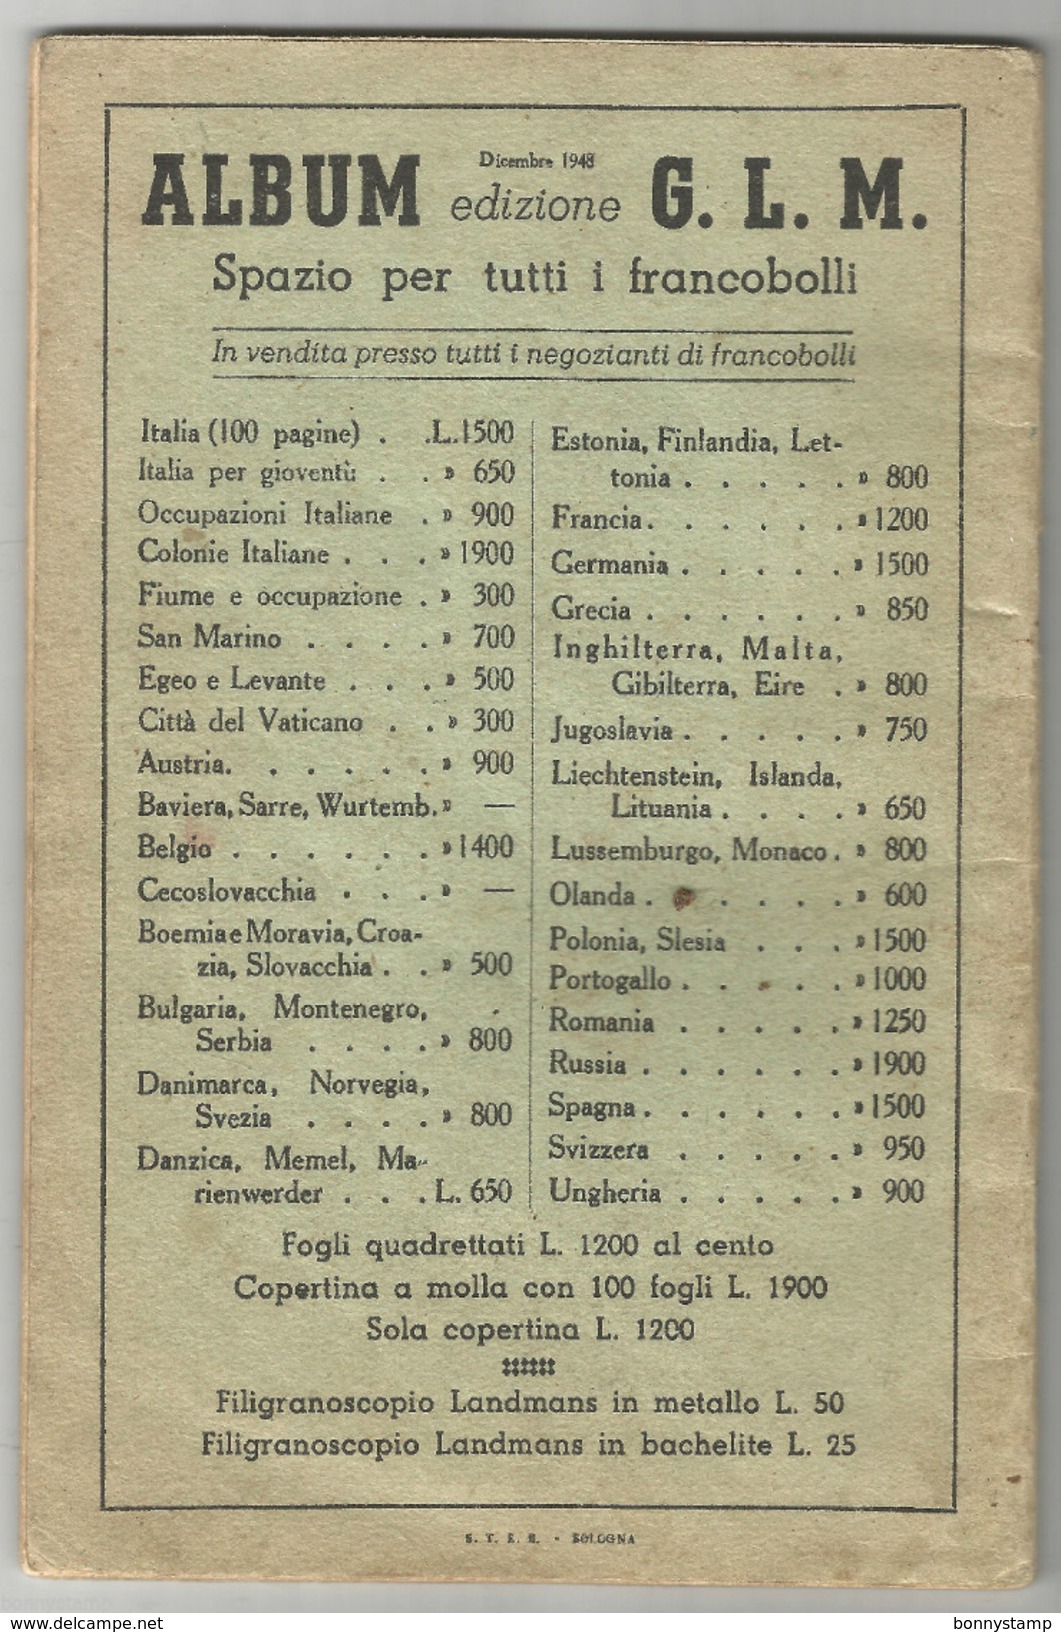 Catalogo Dei Francobolli D'Italia, 1949 - Ditta Alberto Bolaffi - Italy